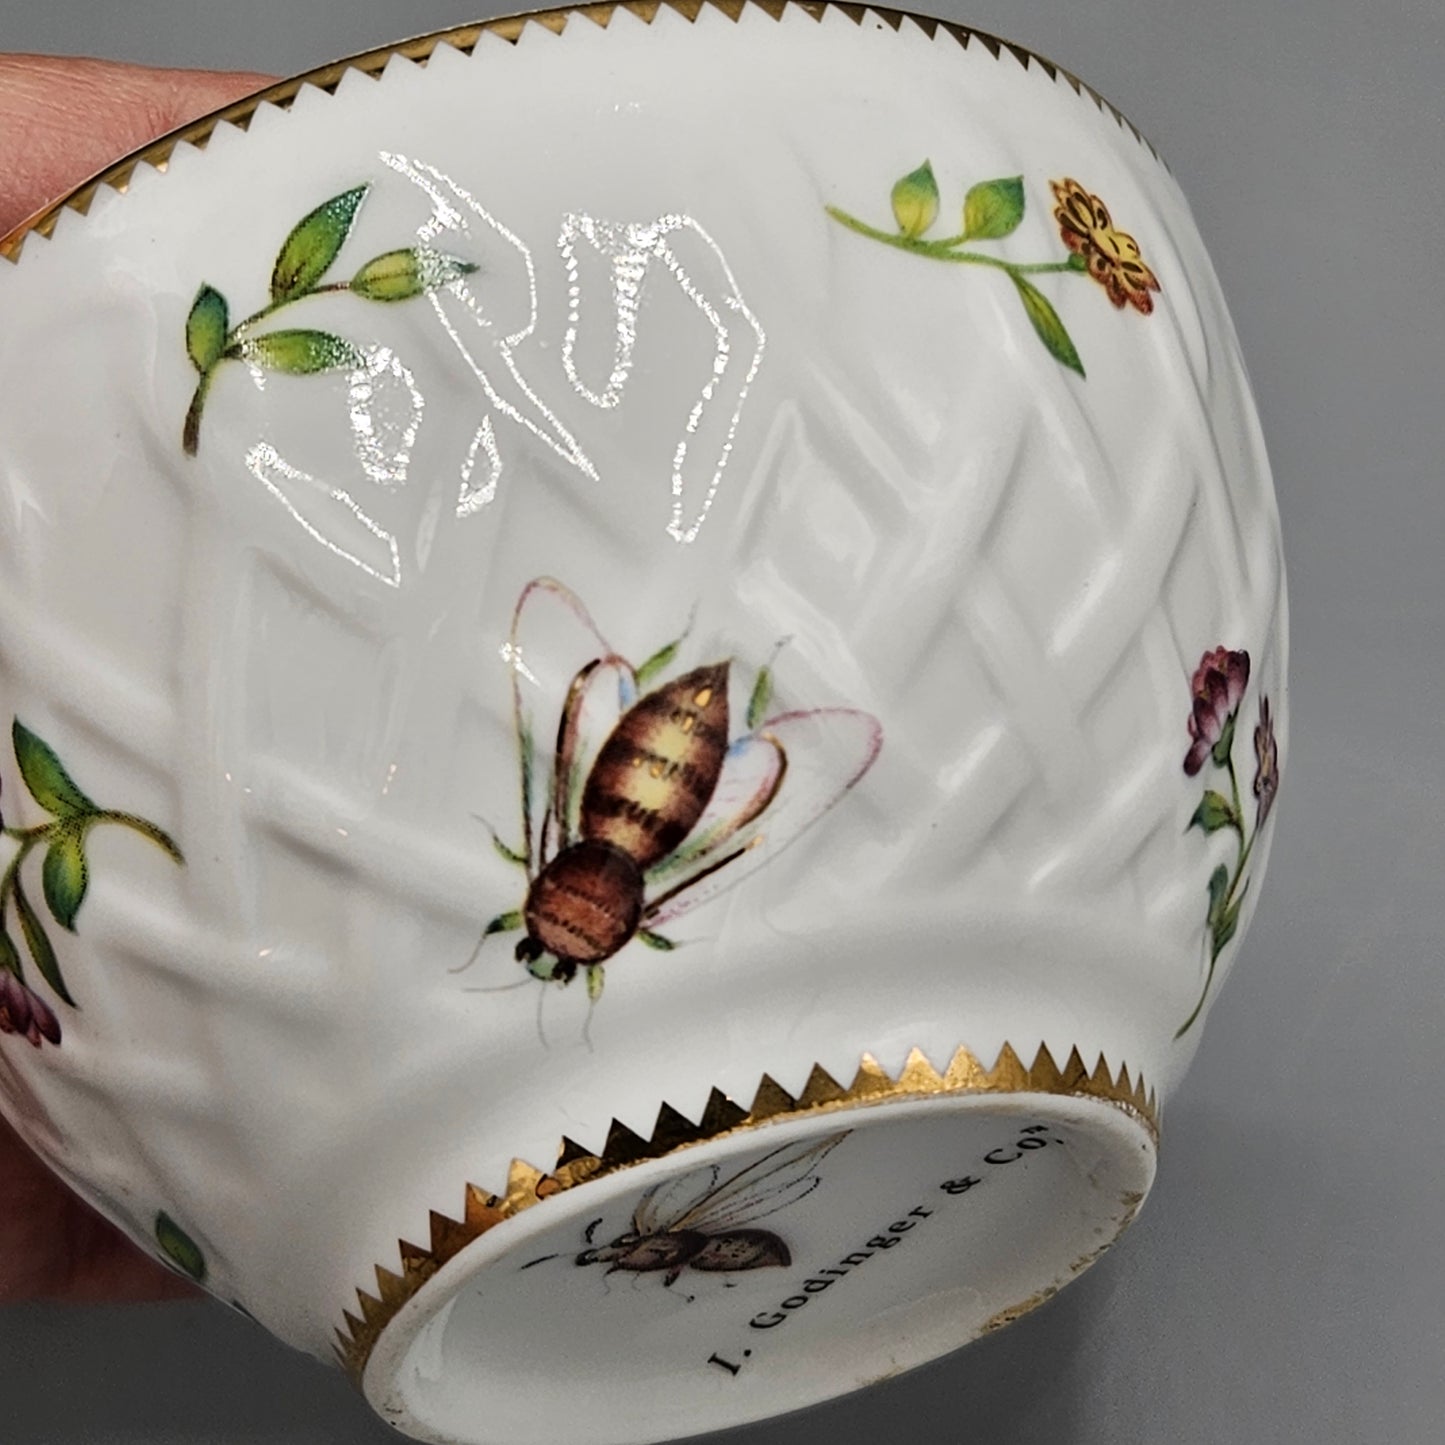 I Godinger & Co Herend-Style Porcelain Primavera Sugar Bowl - Bees and Flowers